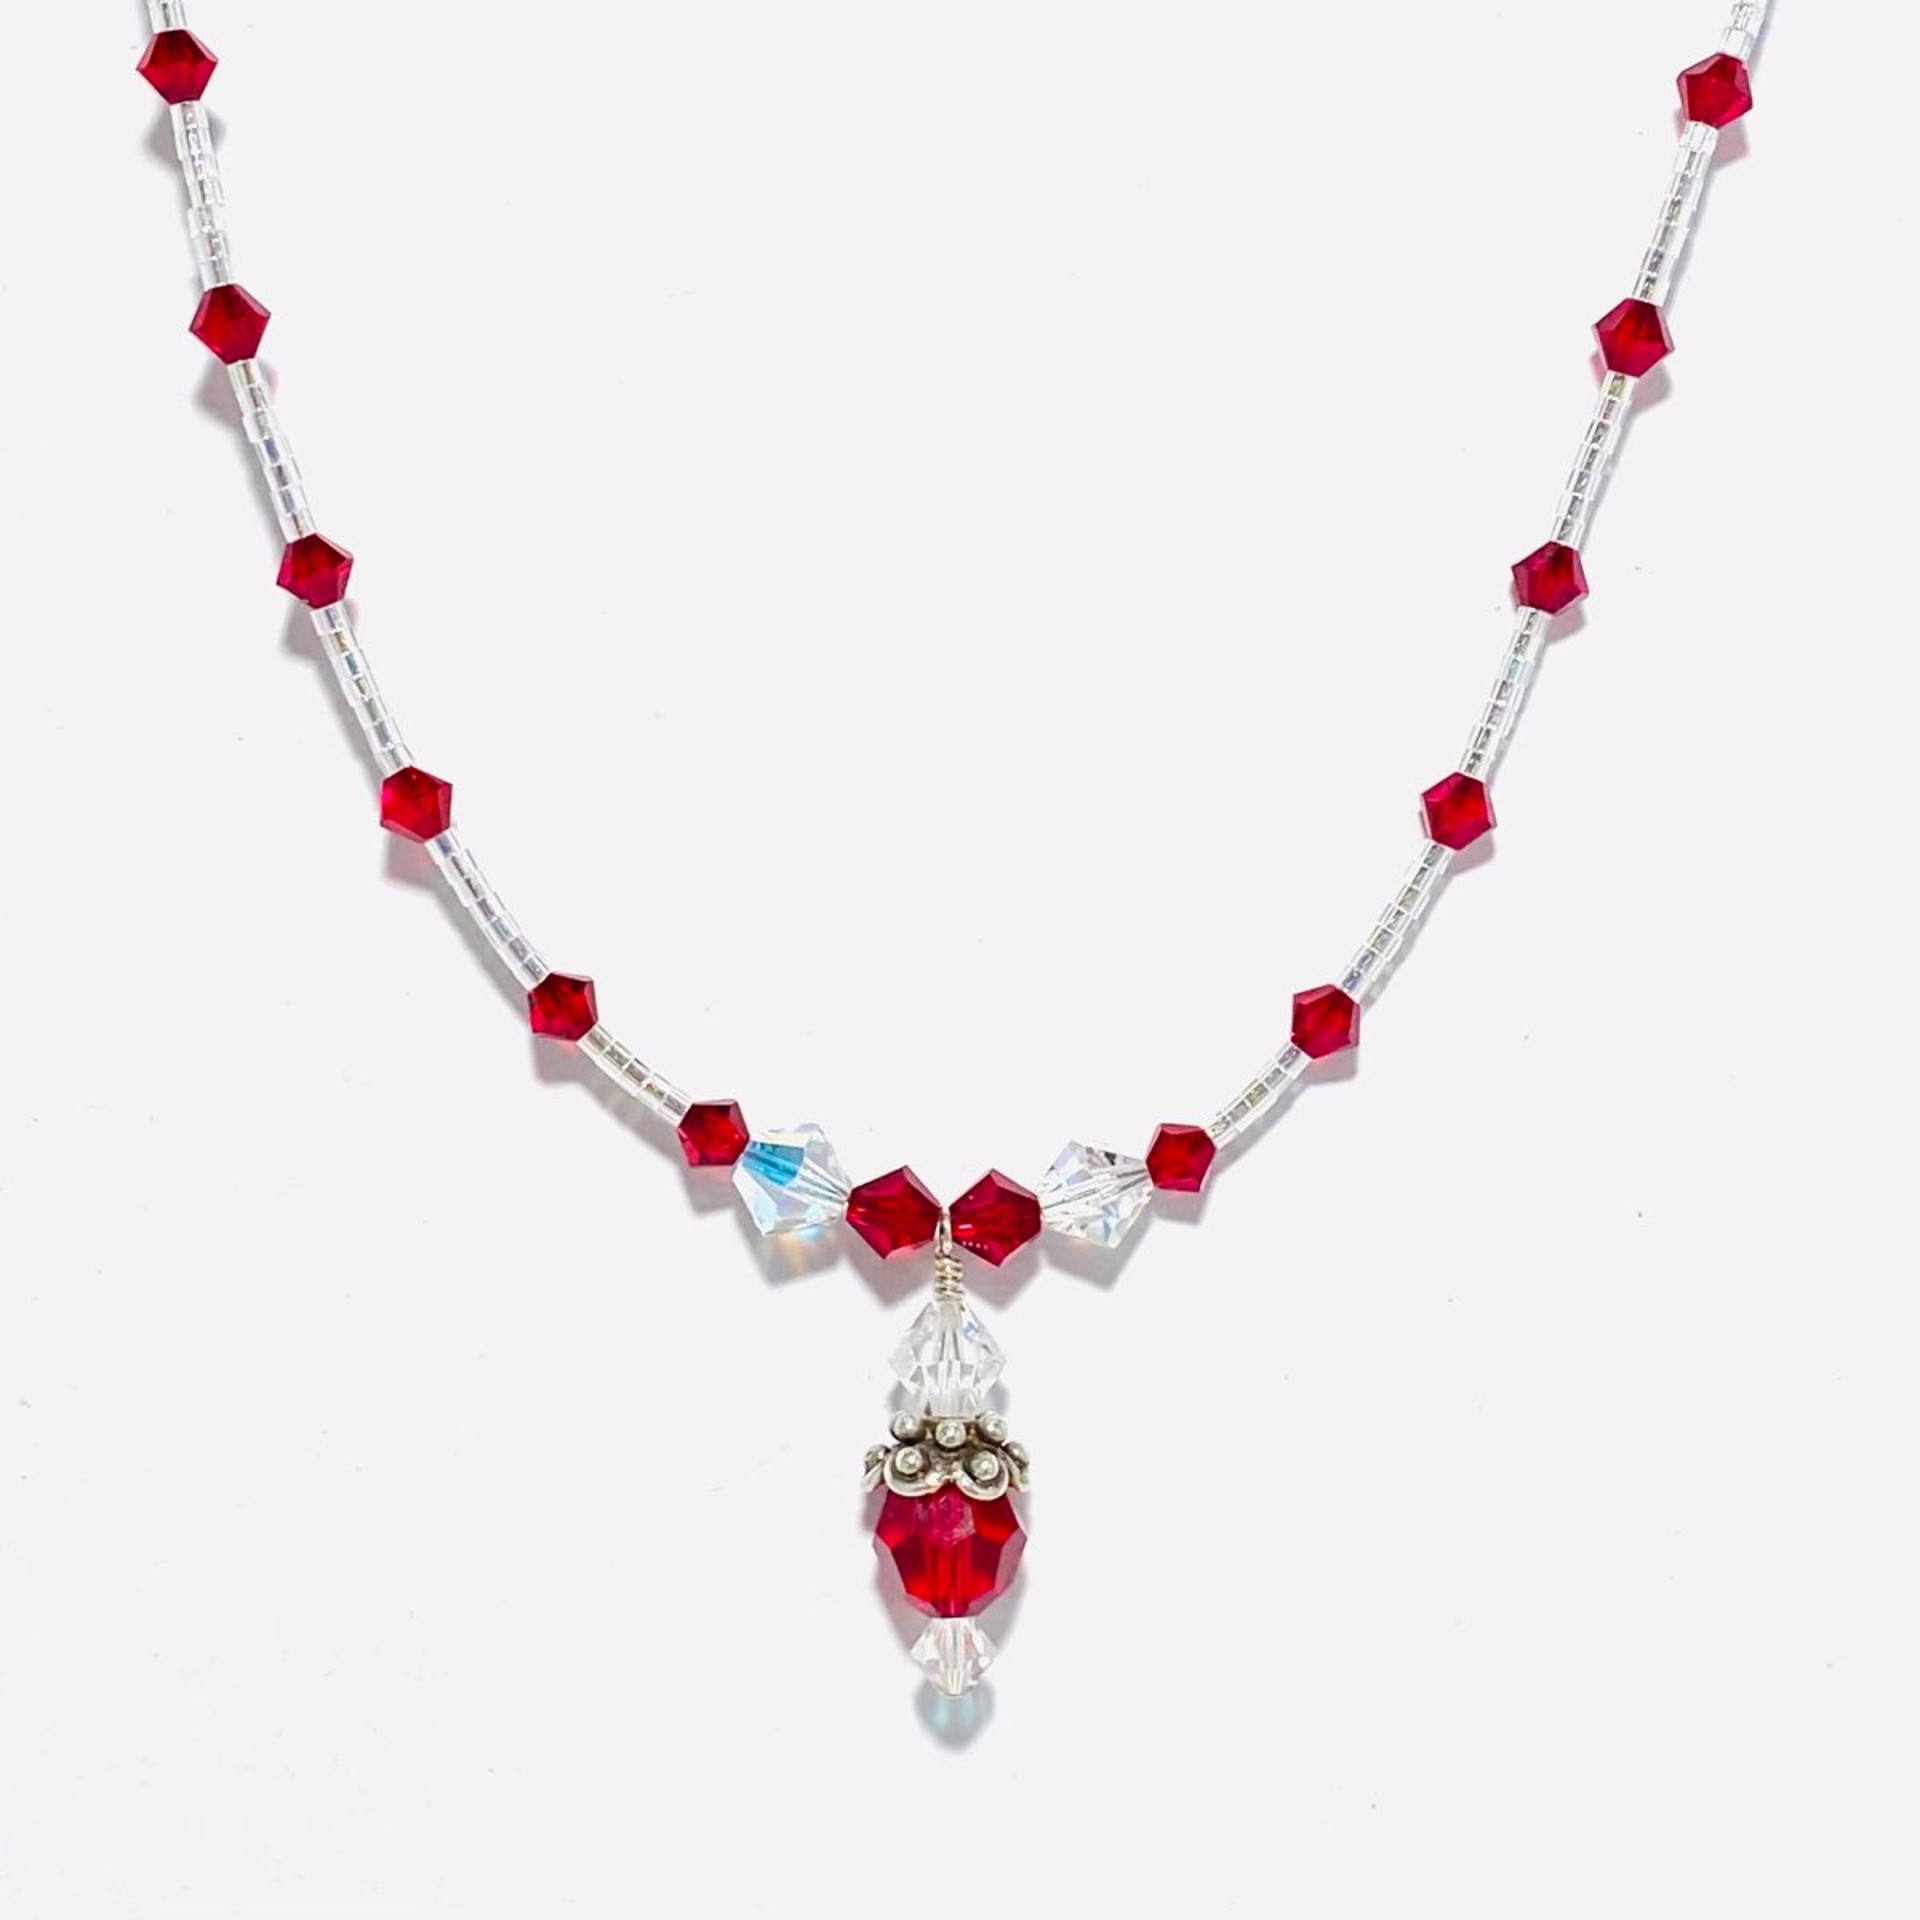 Birthstone Necklace~January Garnet Swarovski Crystals SHOSH22-56 by Shoshannah Weinisch